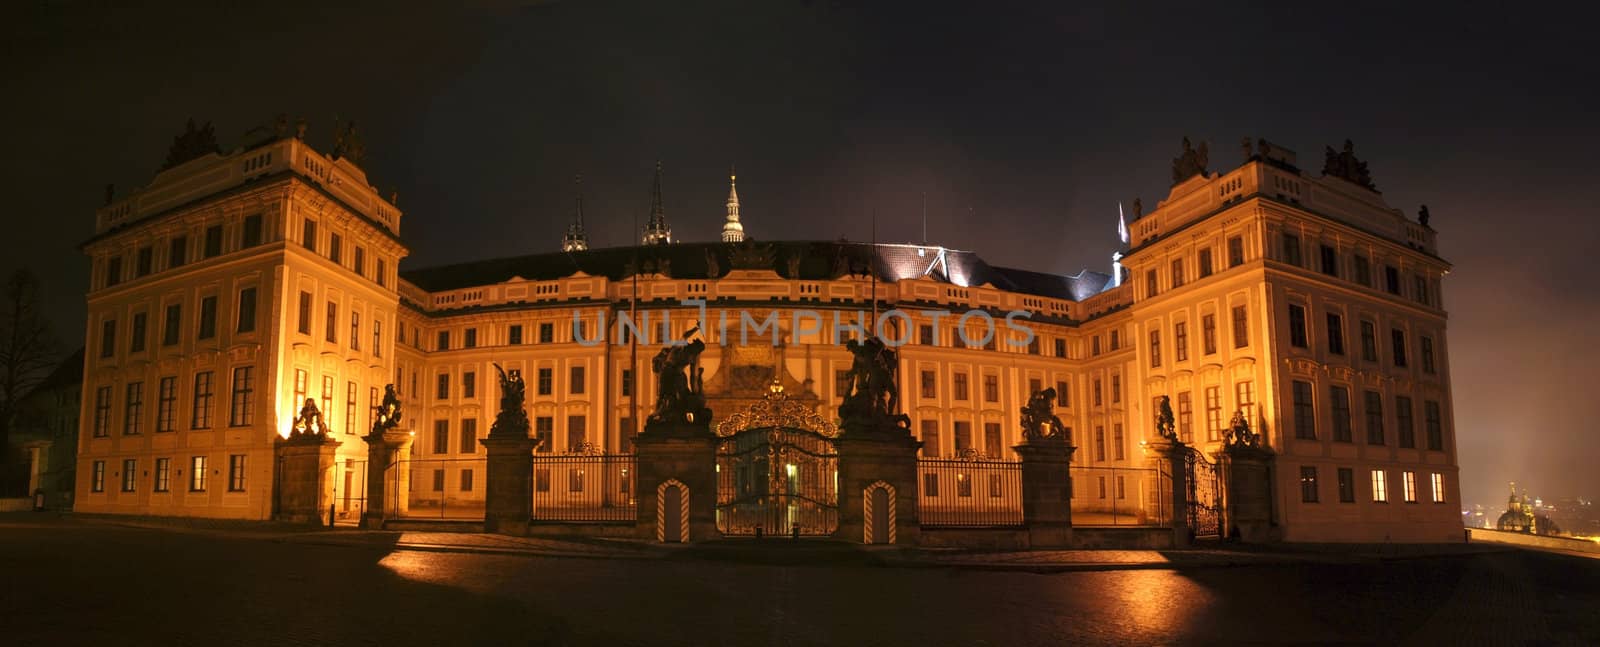 Czech Castle by drakodav